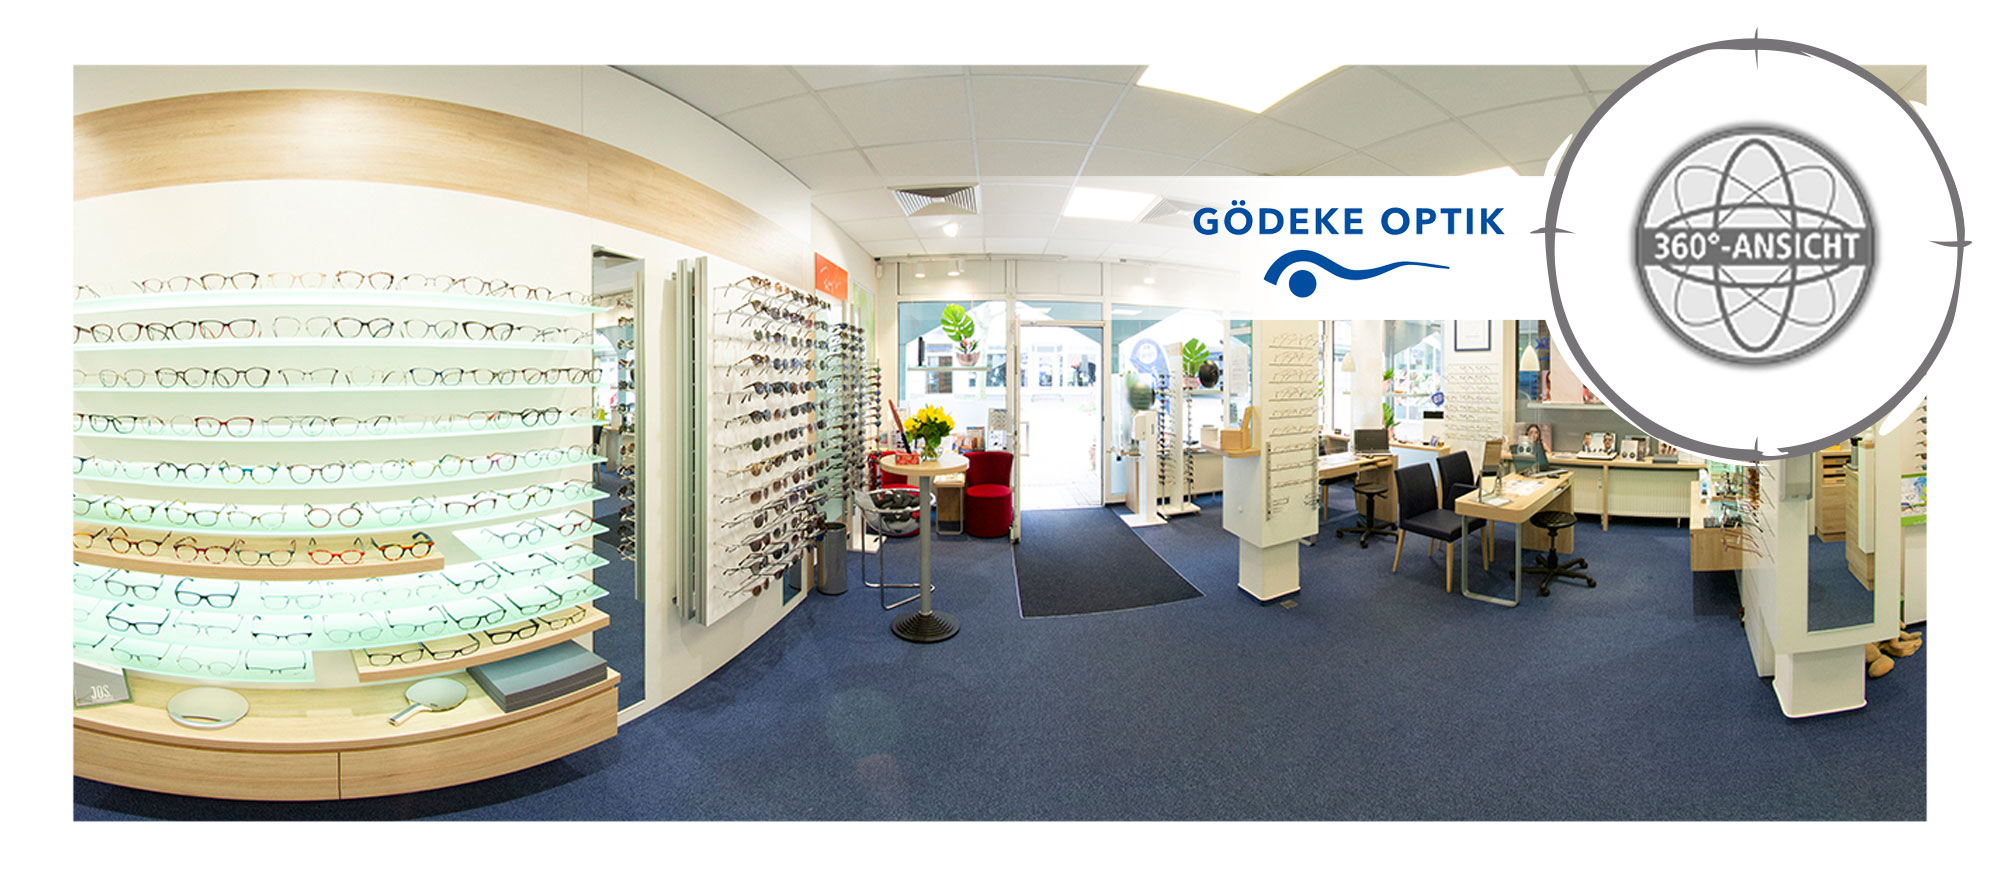 Virtuelle Tour Gödeke Optik | Heydenbluth Design Werbung aus Barsinghausen